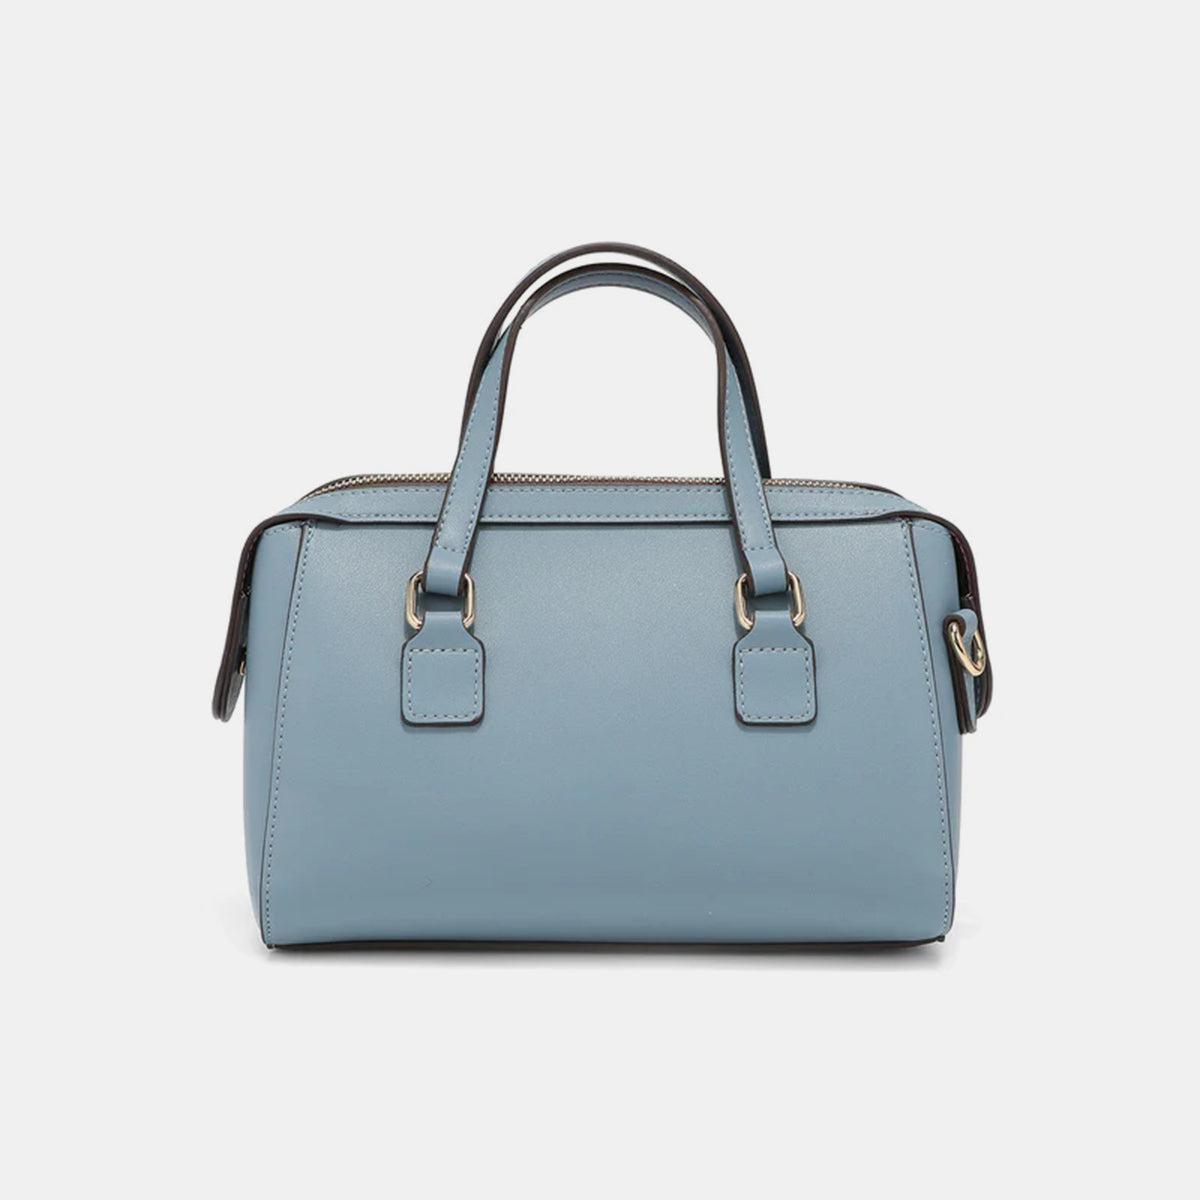 a blue handbag on a white background